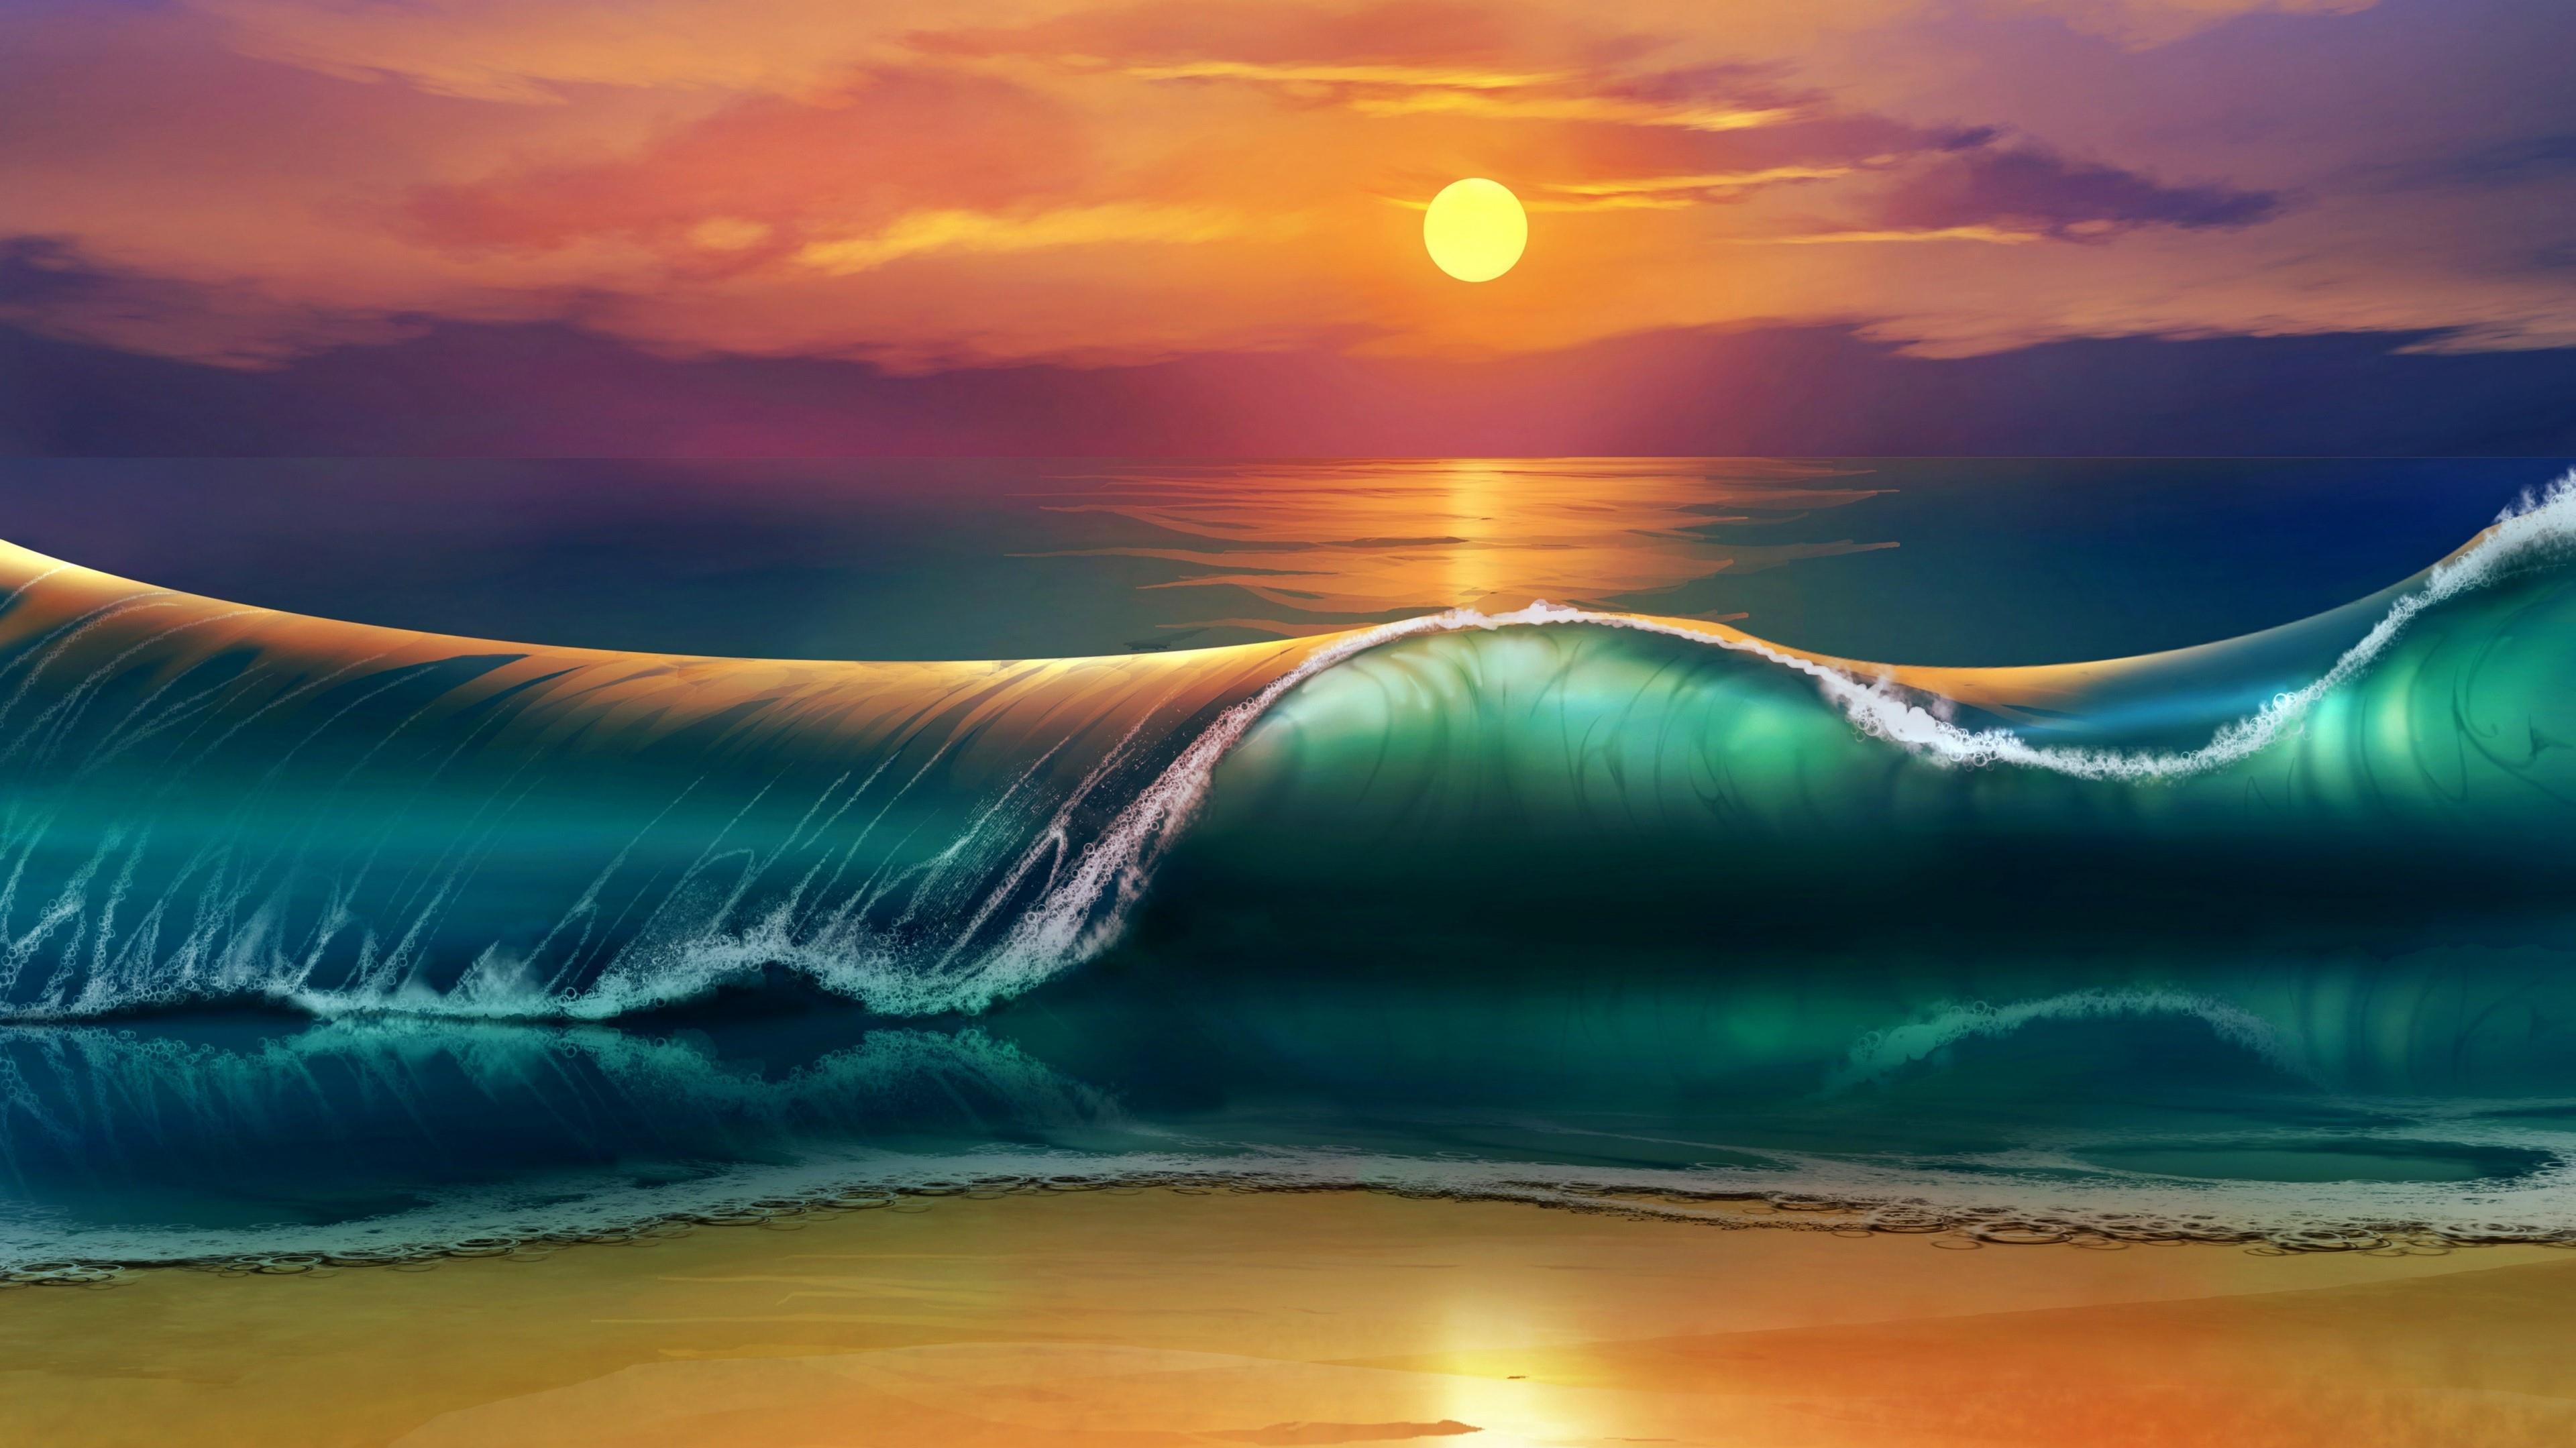 Sunset Sea Waves Beach 4k Ultra HD Wallpaper For Desktop Mobile